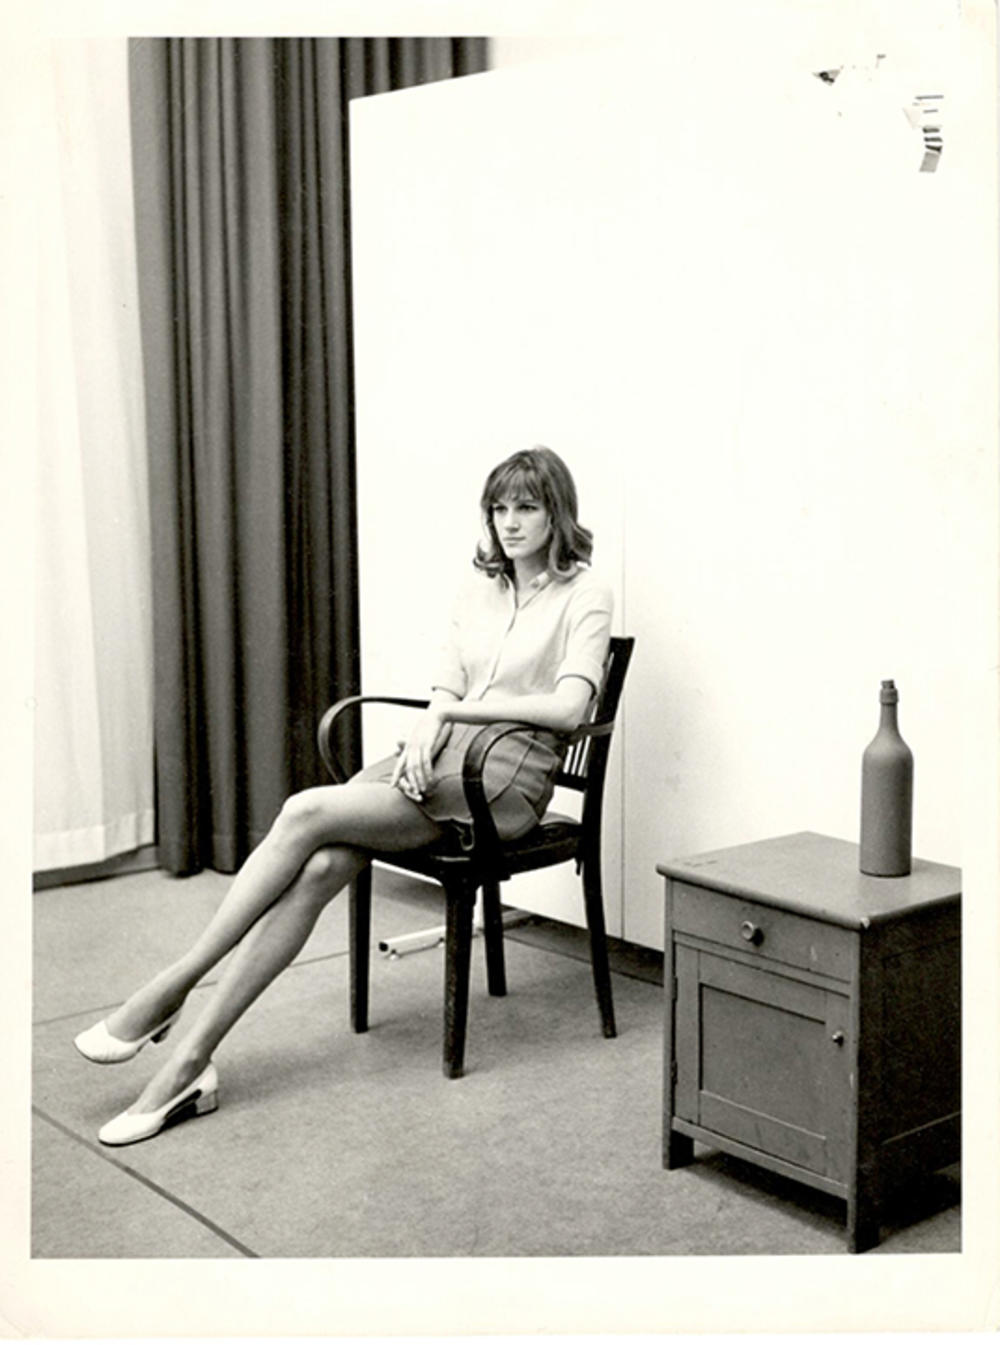 Marinela Koželj, Drangularijum, SKC, Beograd, 23. jun 1971.